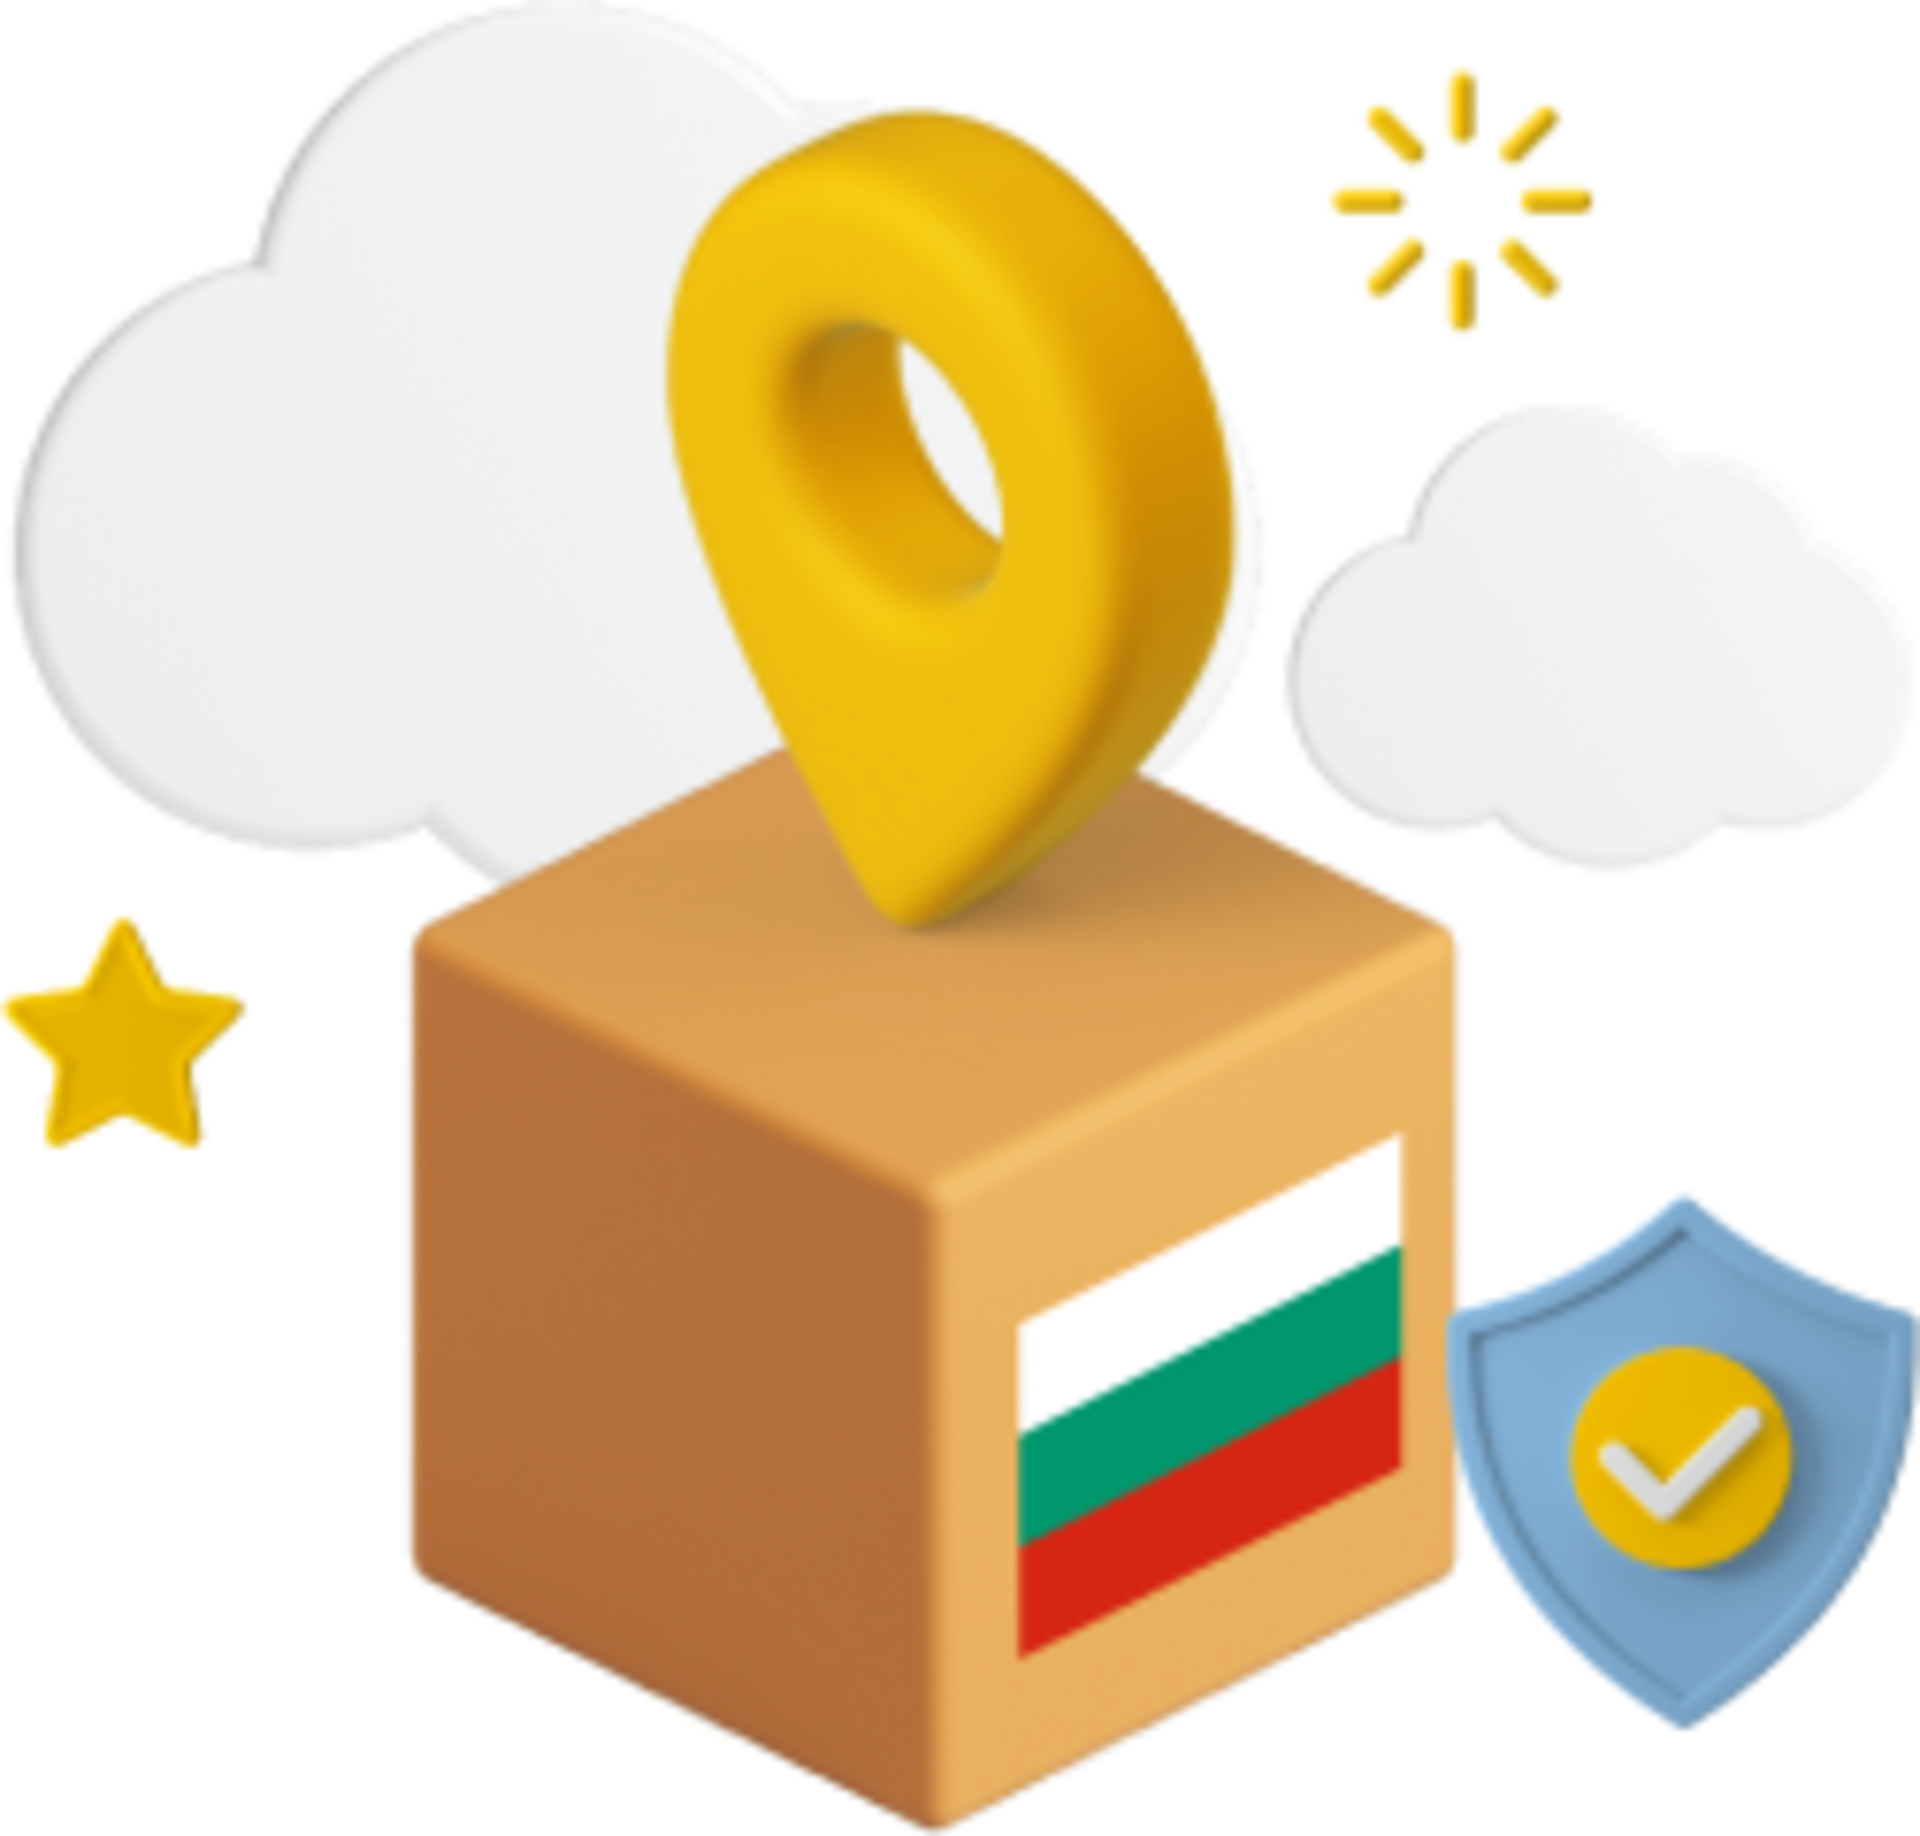 Box with Bulgarian flag on